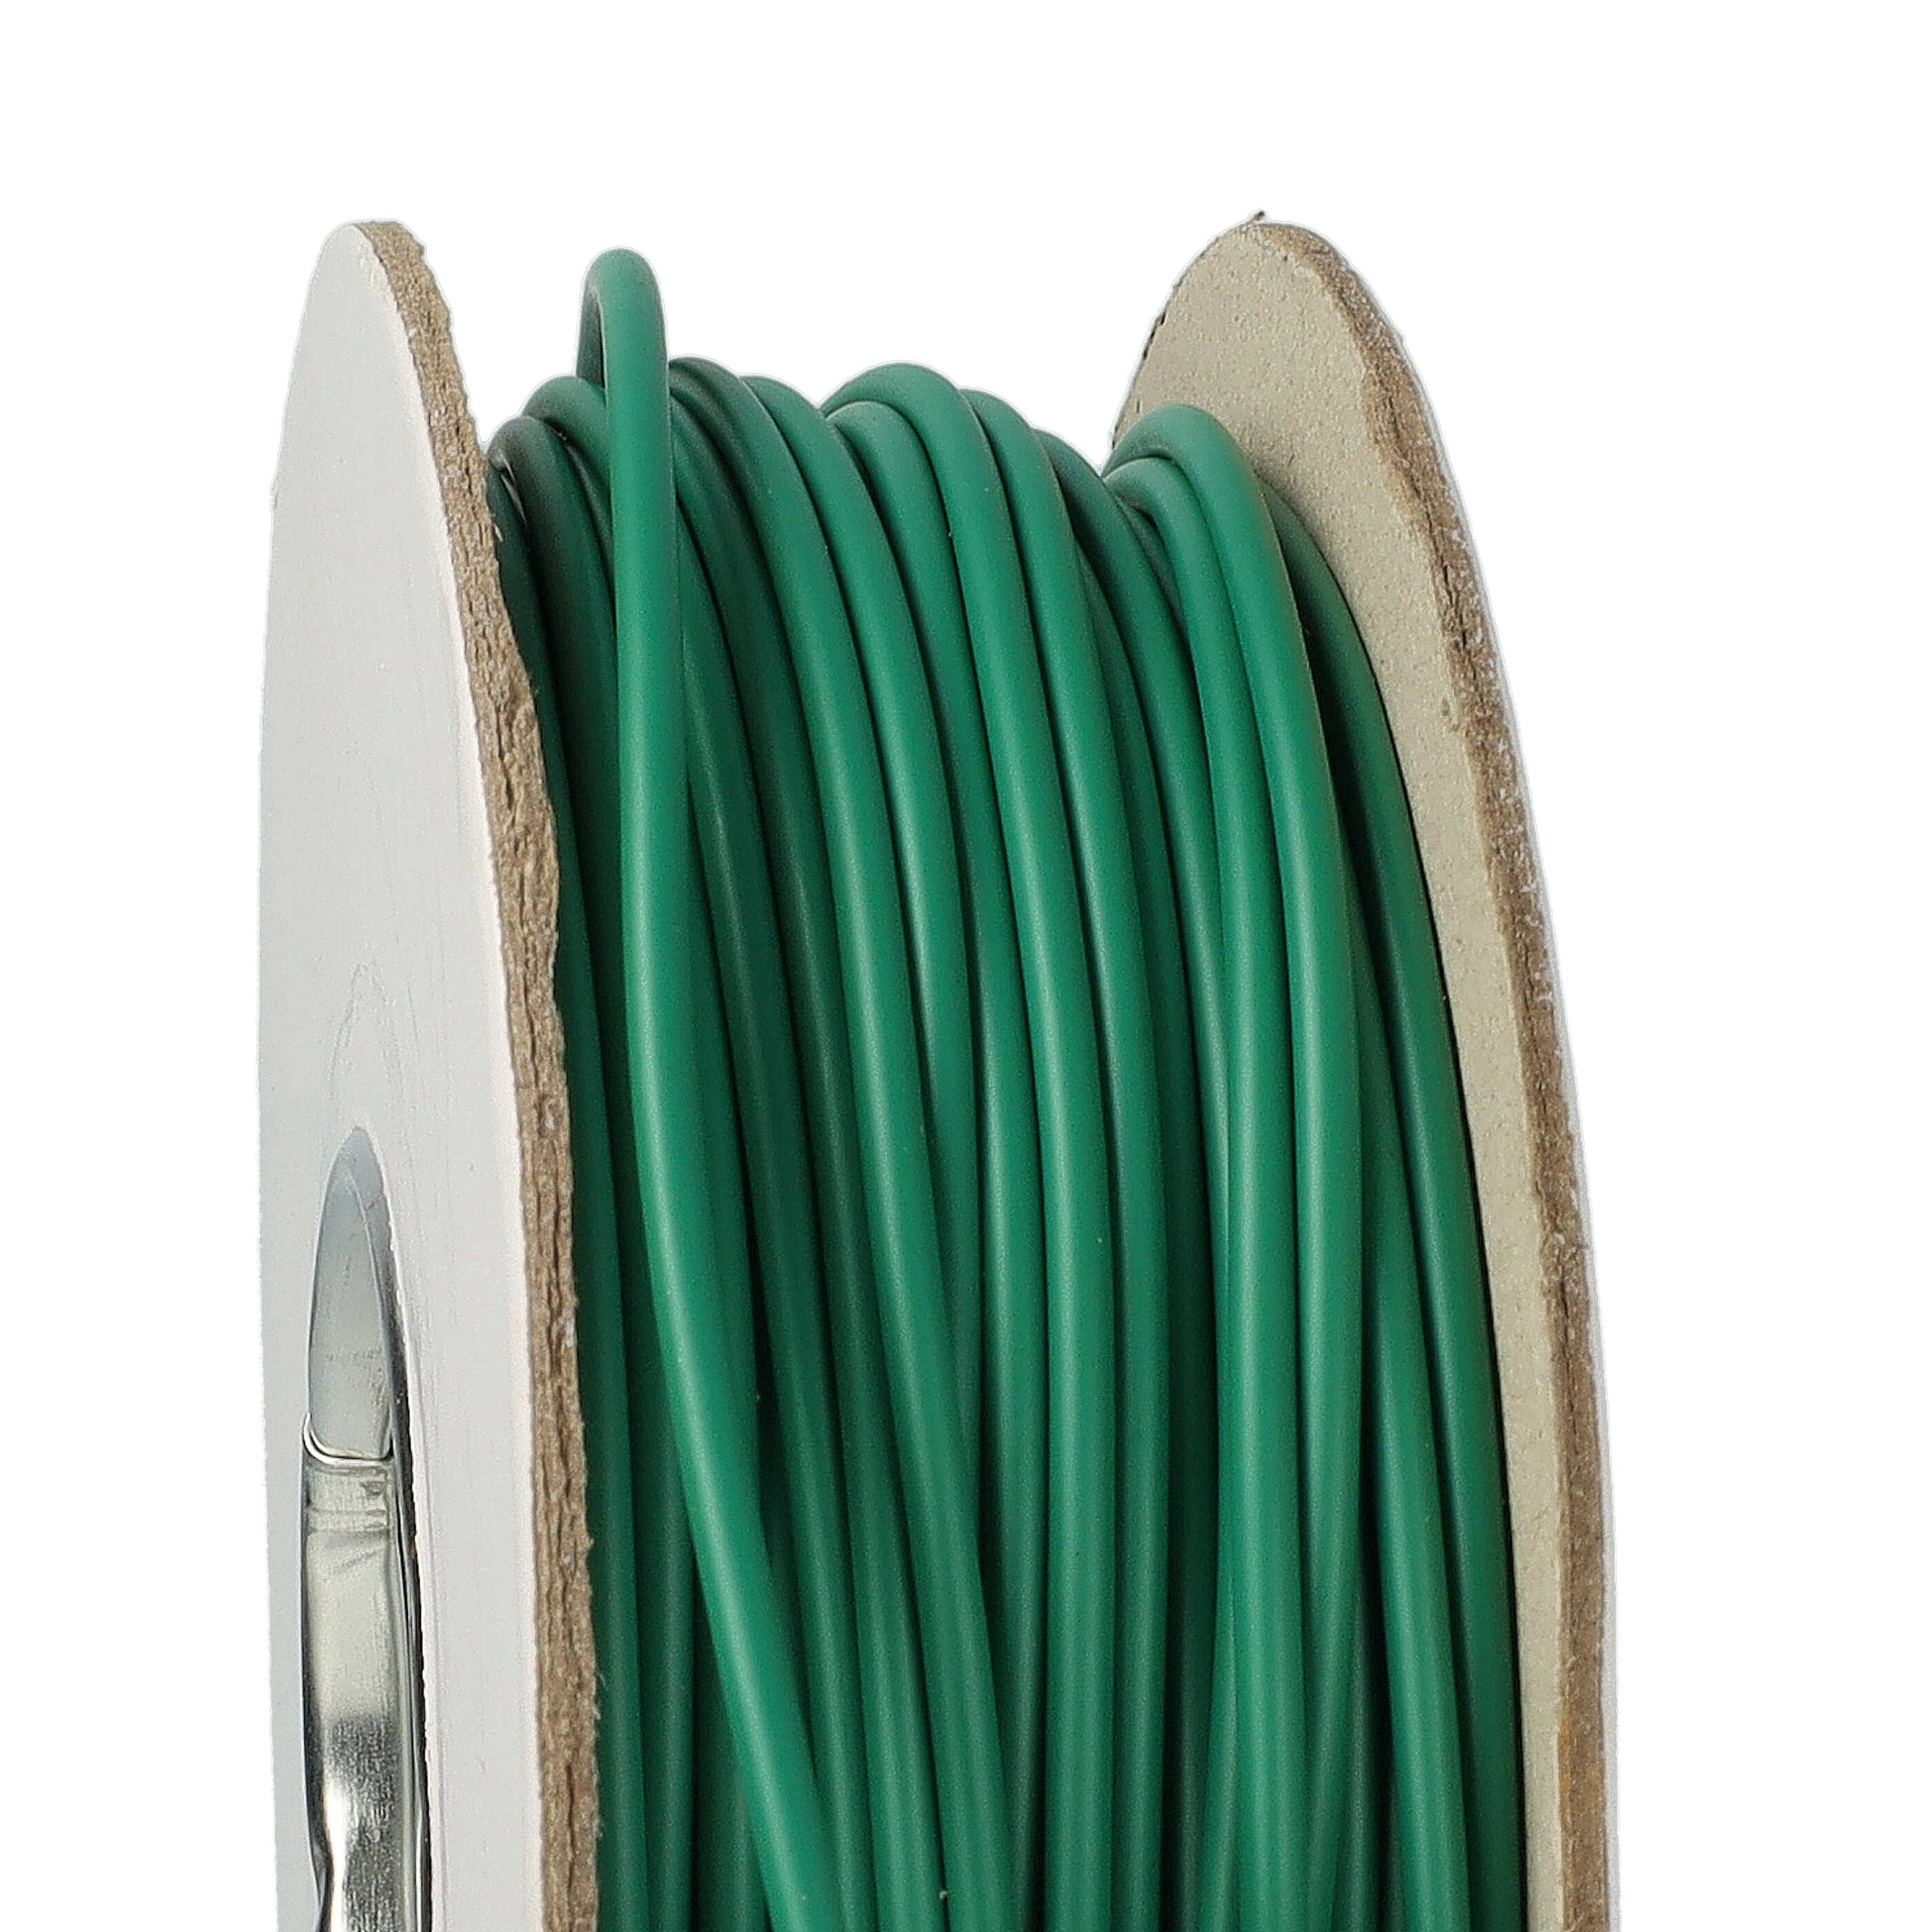 2x Cable delimitador compatible con robots cortacésped Indego 1000 connect, etc. - 50 m